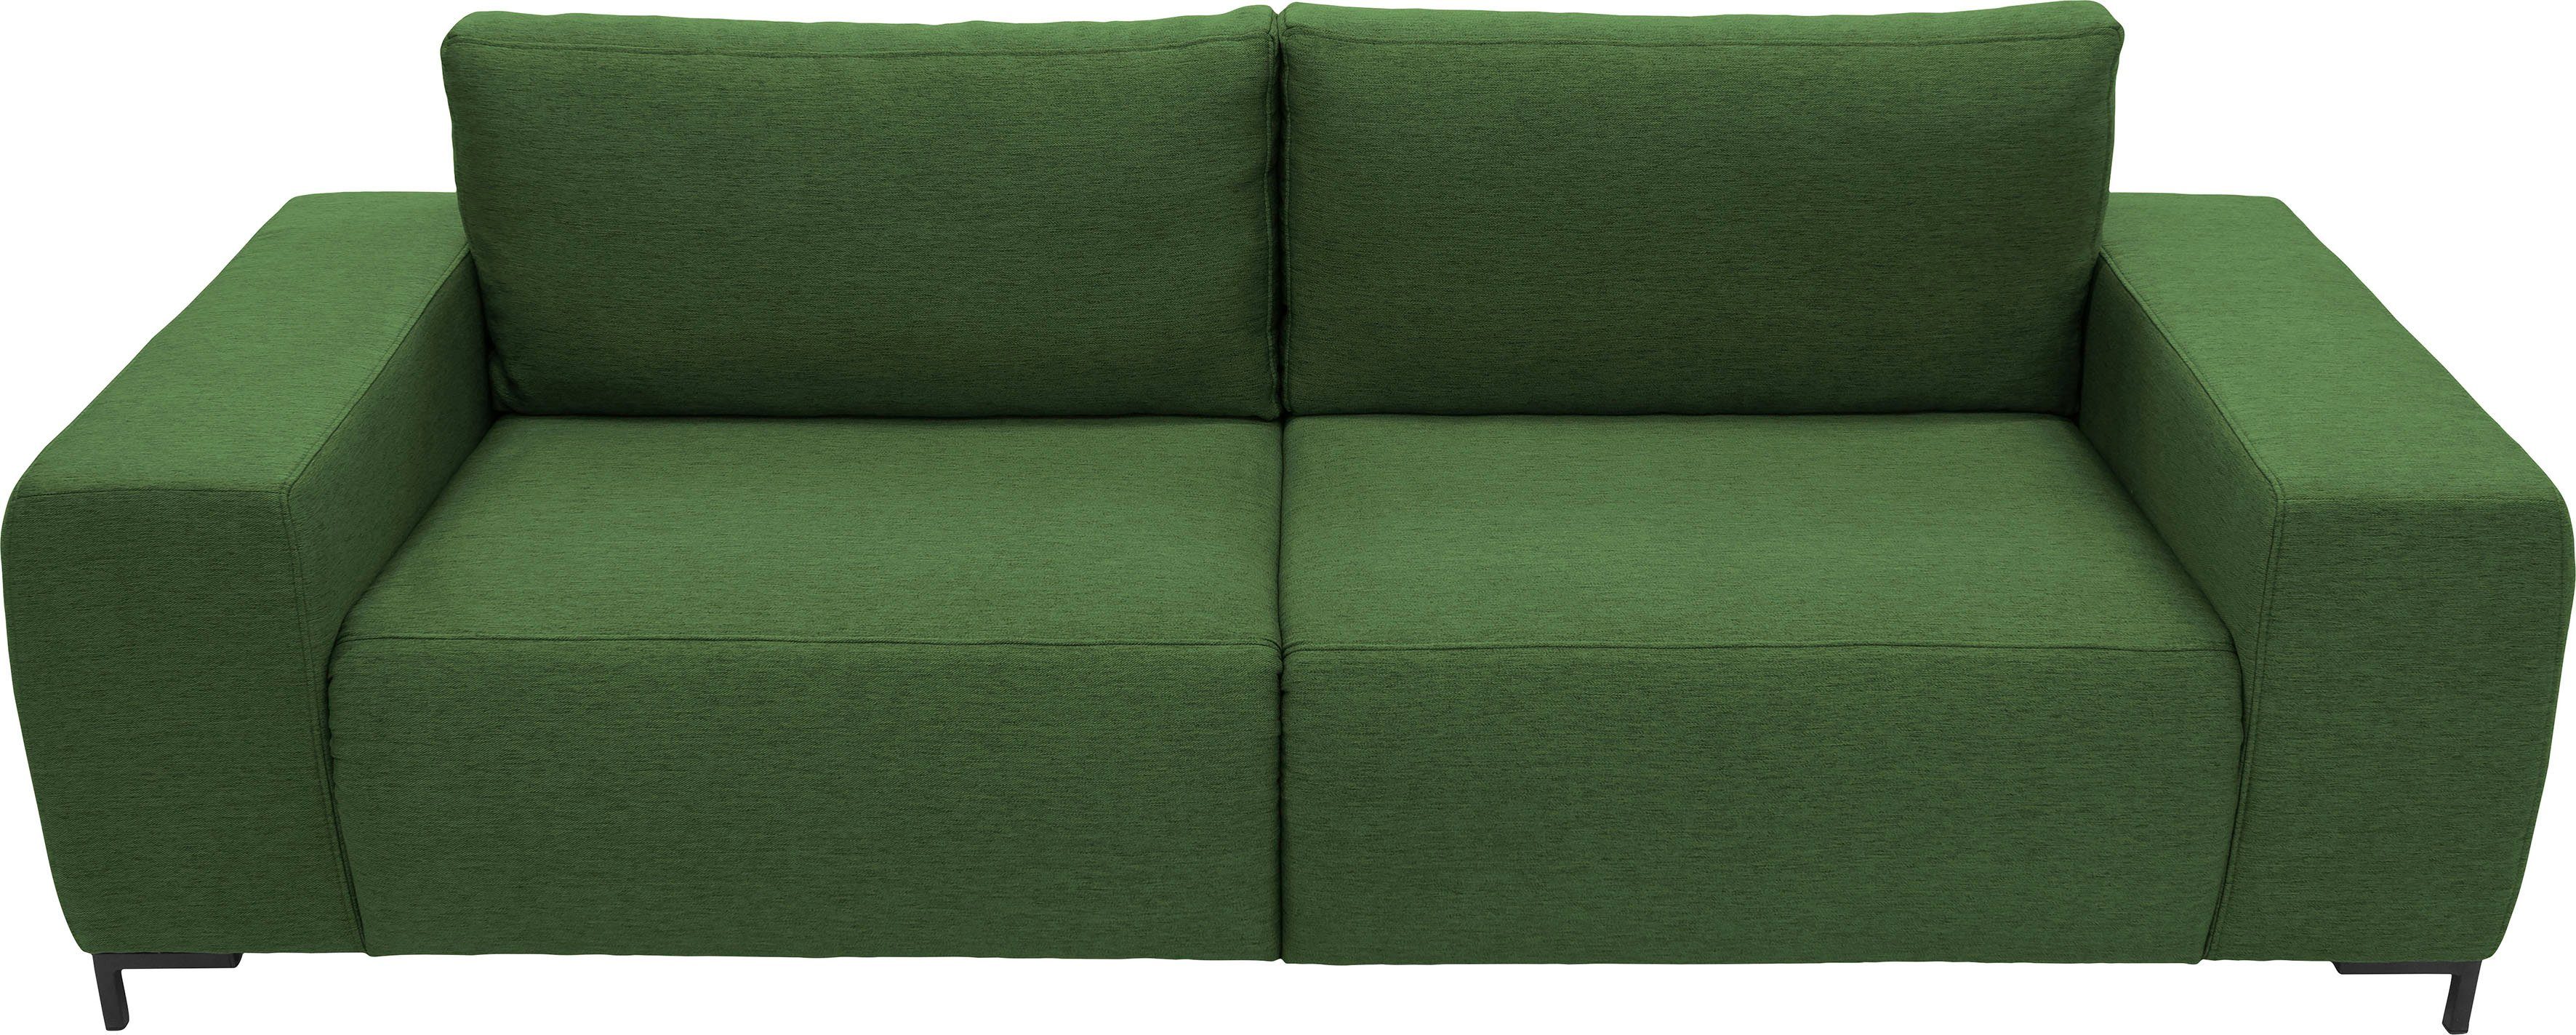 Big-Sofa gerade VI, 2 LOOKS Looks Wolfgang Linien, Bezugsqualitäten in by Joop